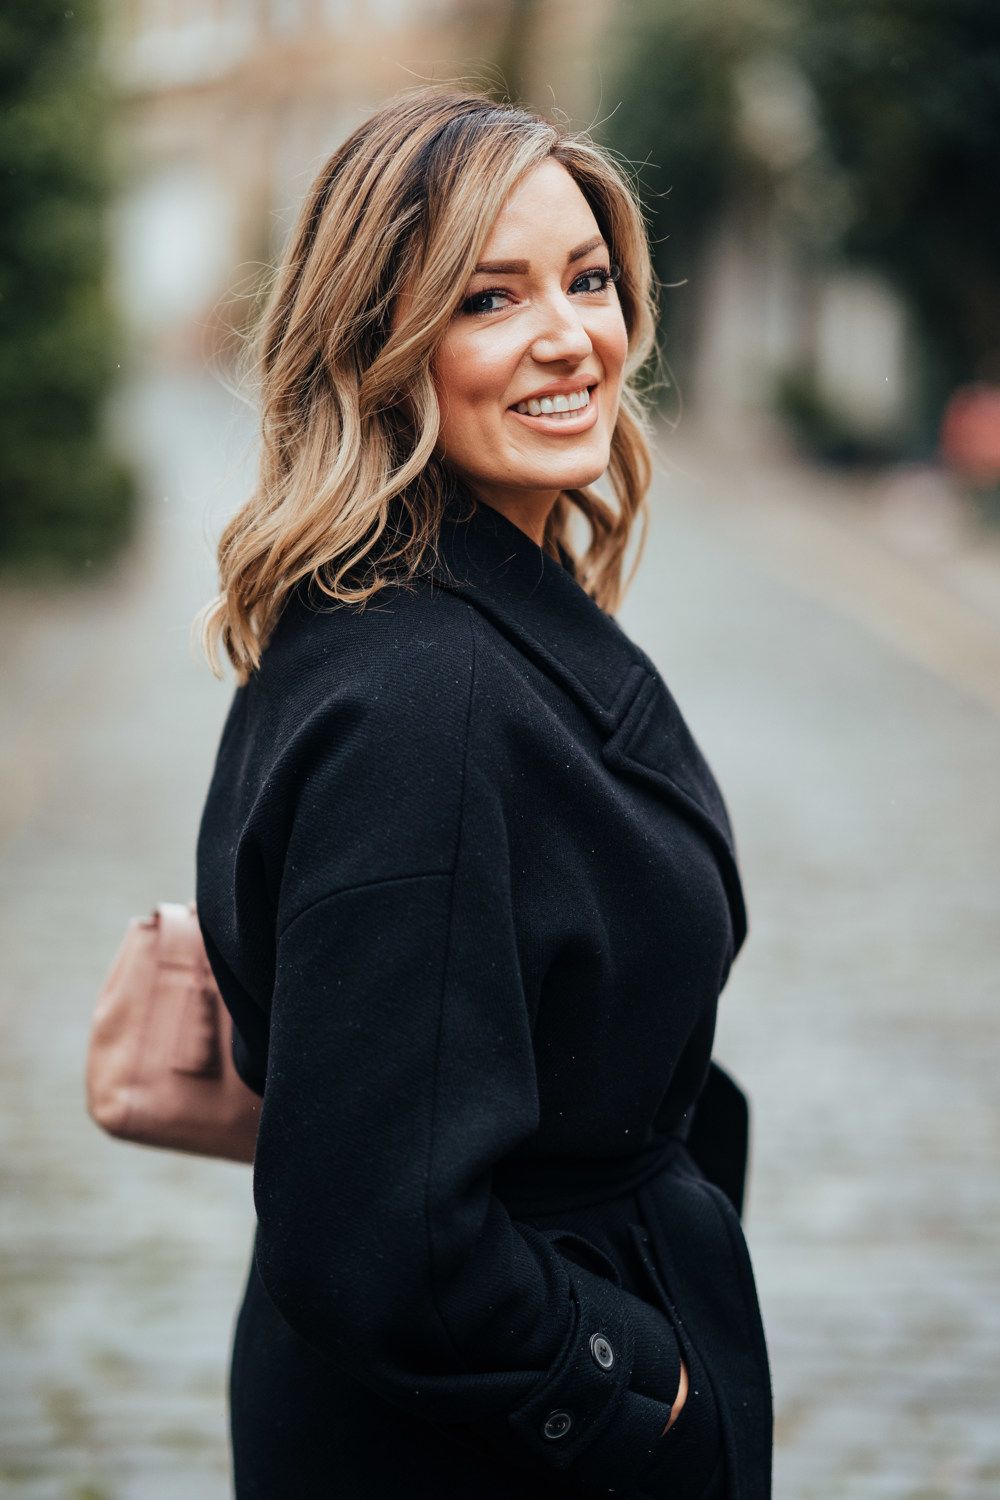 Beautiful woman smiling in a black coat